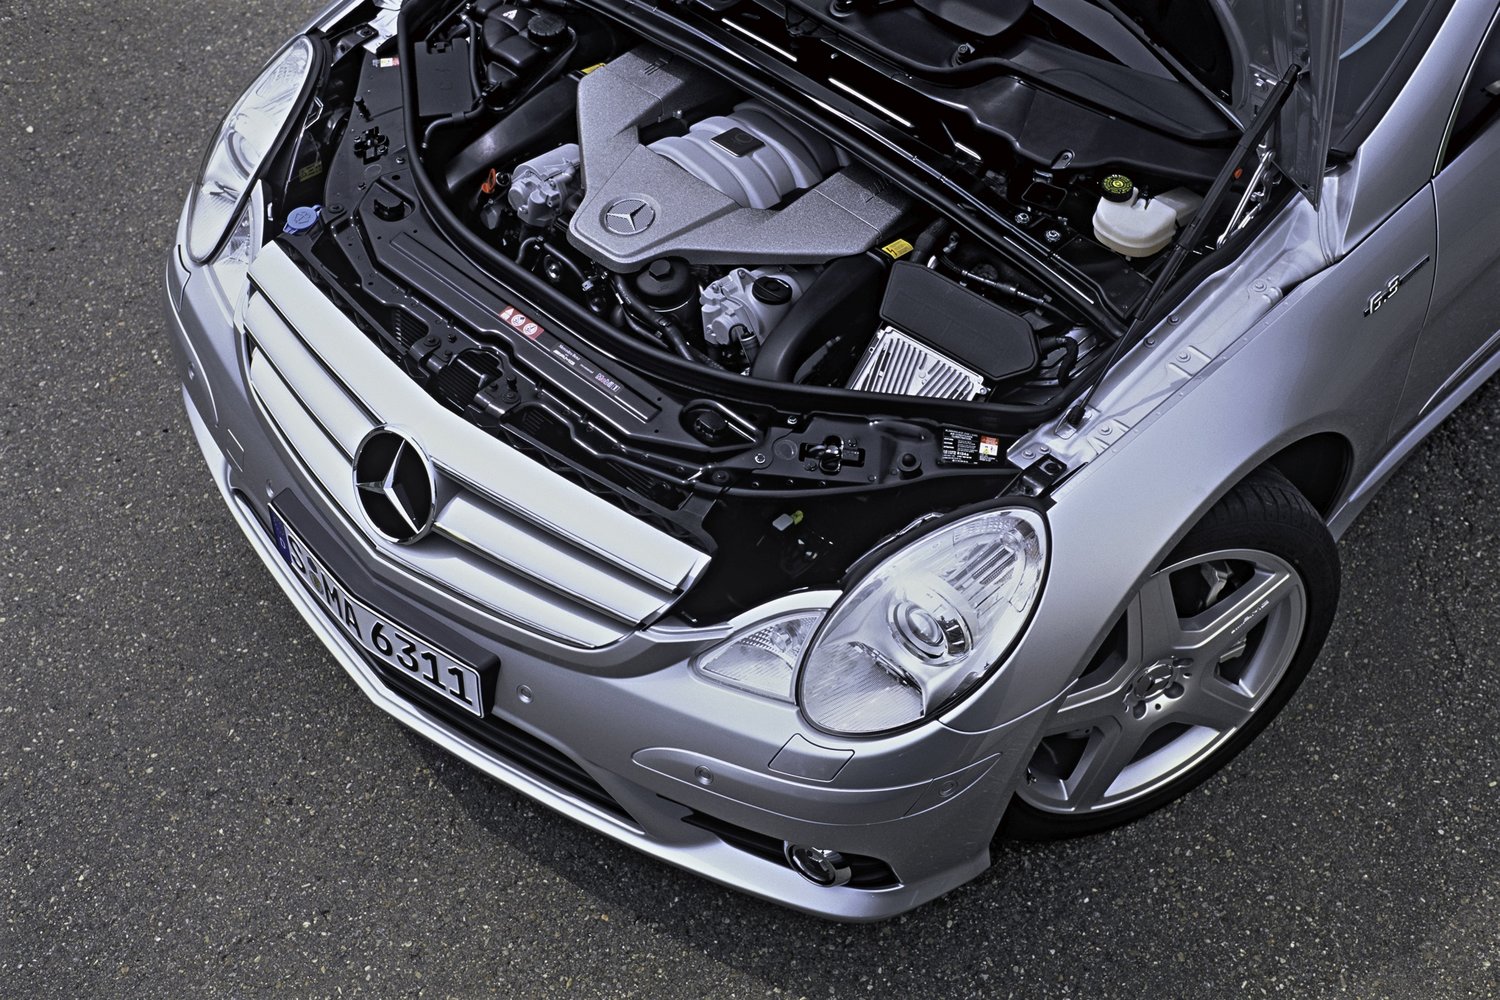 минивэн Mercedes-Benz R-klasse AMG 2006 - 2007г выпуска модификация 6.2 AT (510 л.с.) 4×4